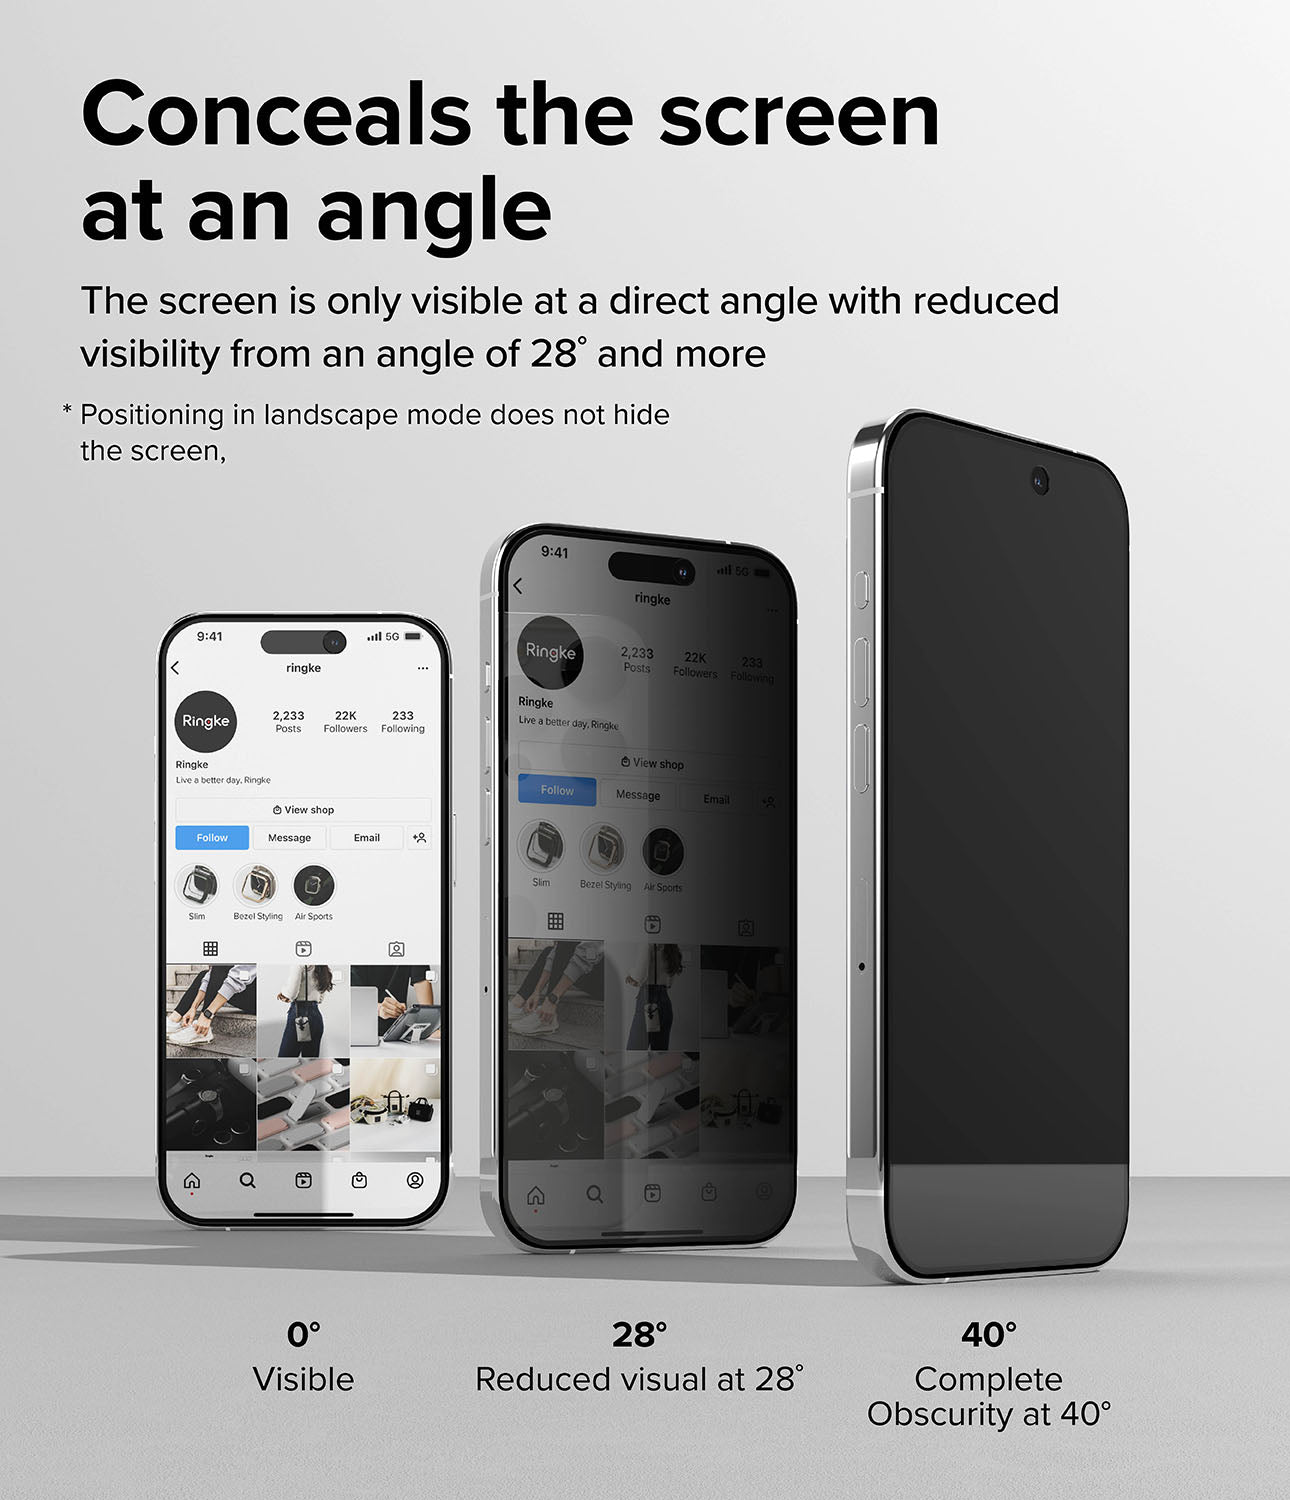 Vidrio Templado Ringke para iPhone 15 Pro Max Privacy Glass - SmartPro